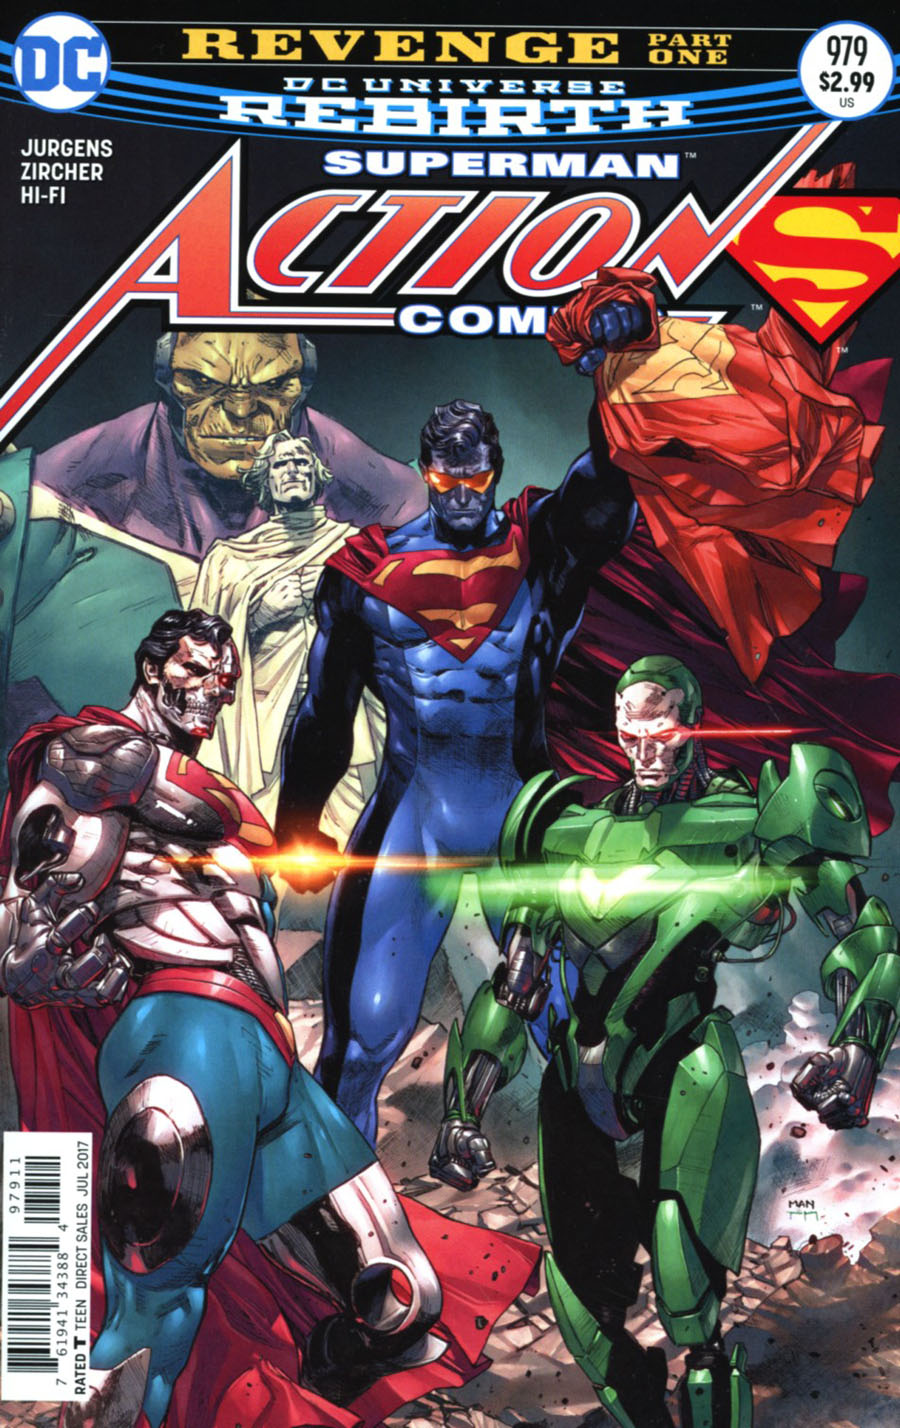 Action Comics #979